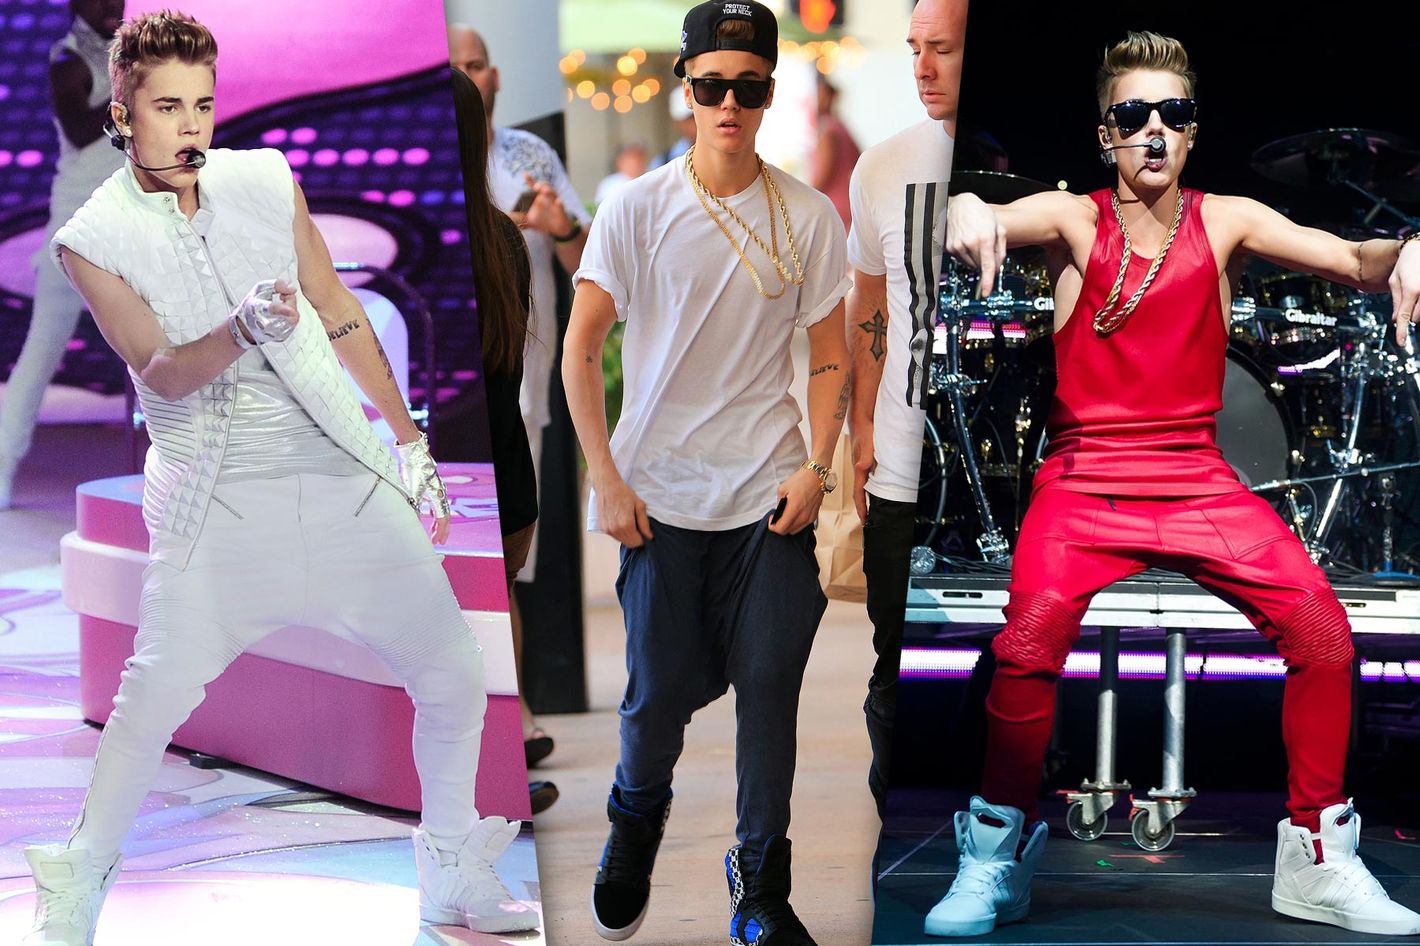 kontakt Bær Forberedelse What Is Justin Bieber Hiding in His Drop-Crotch Pants?